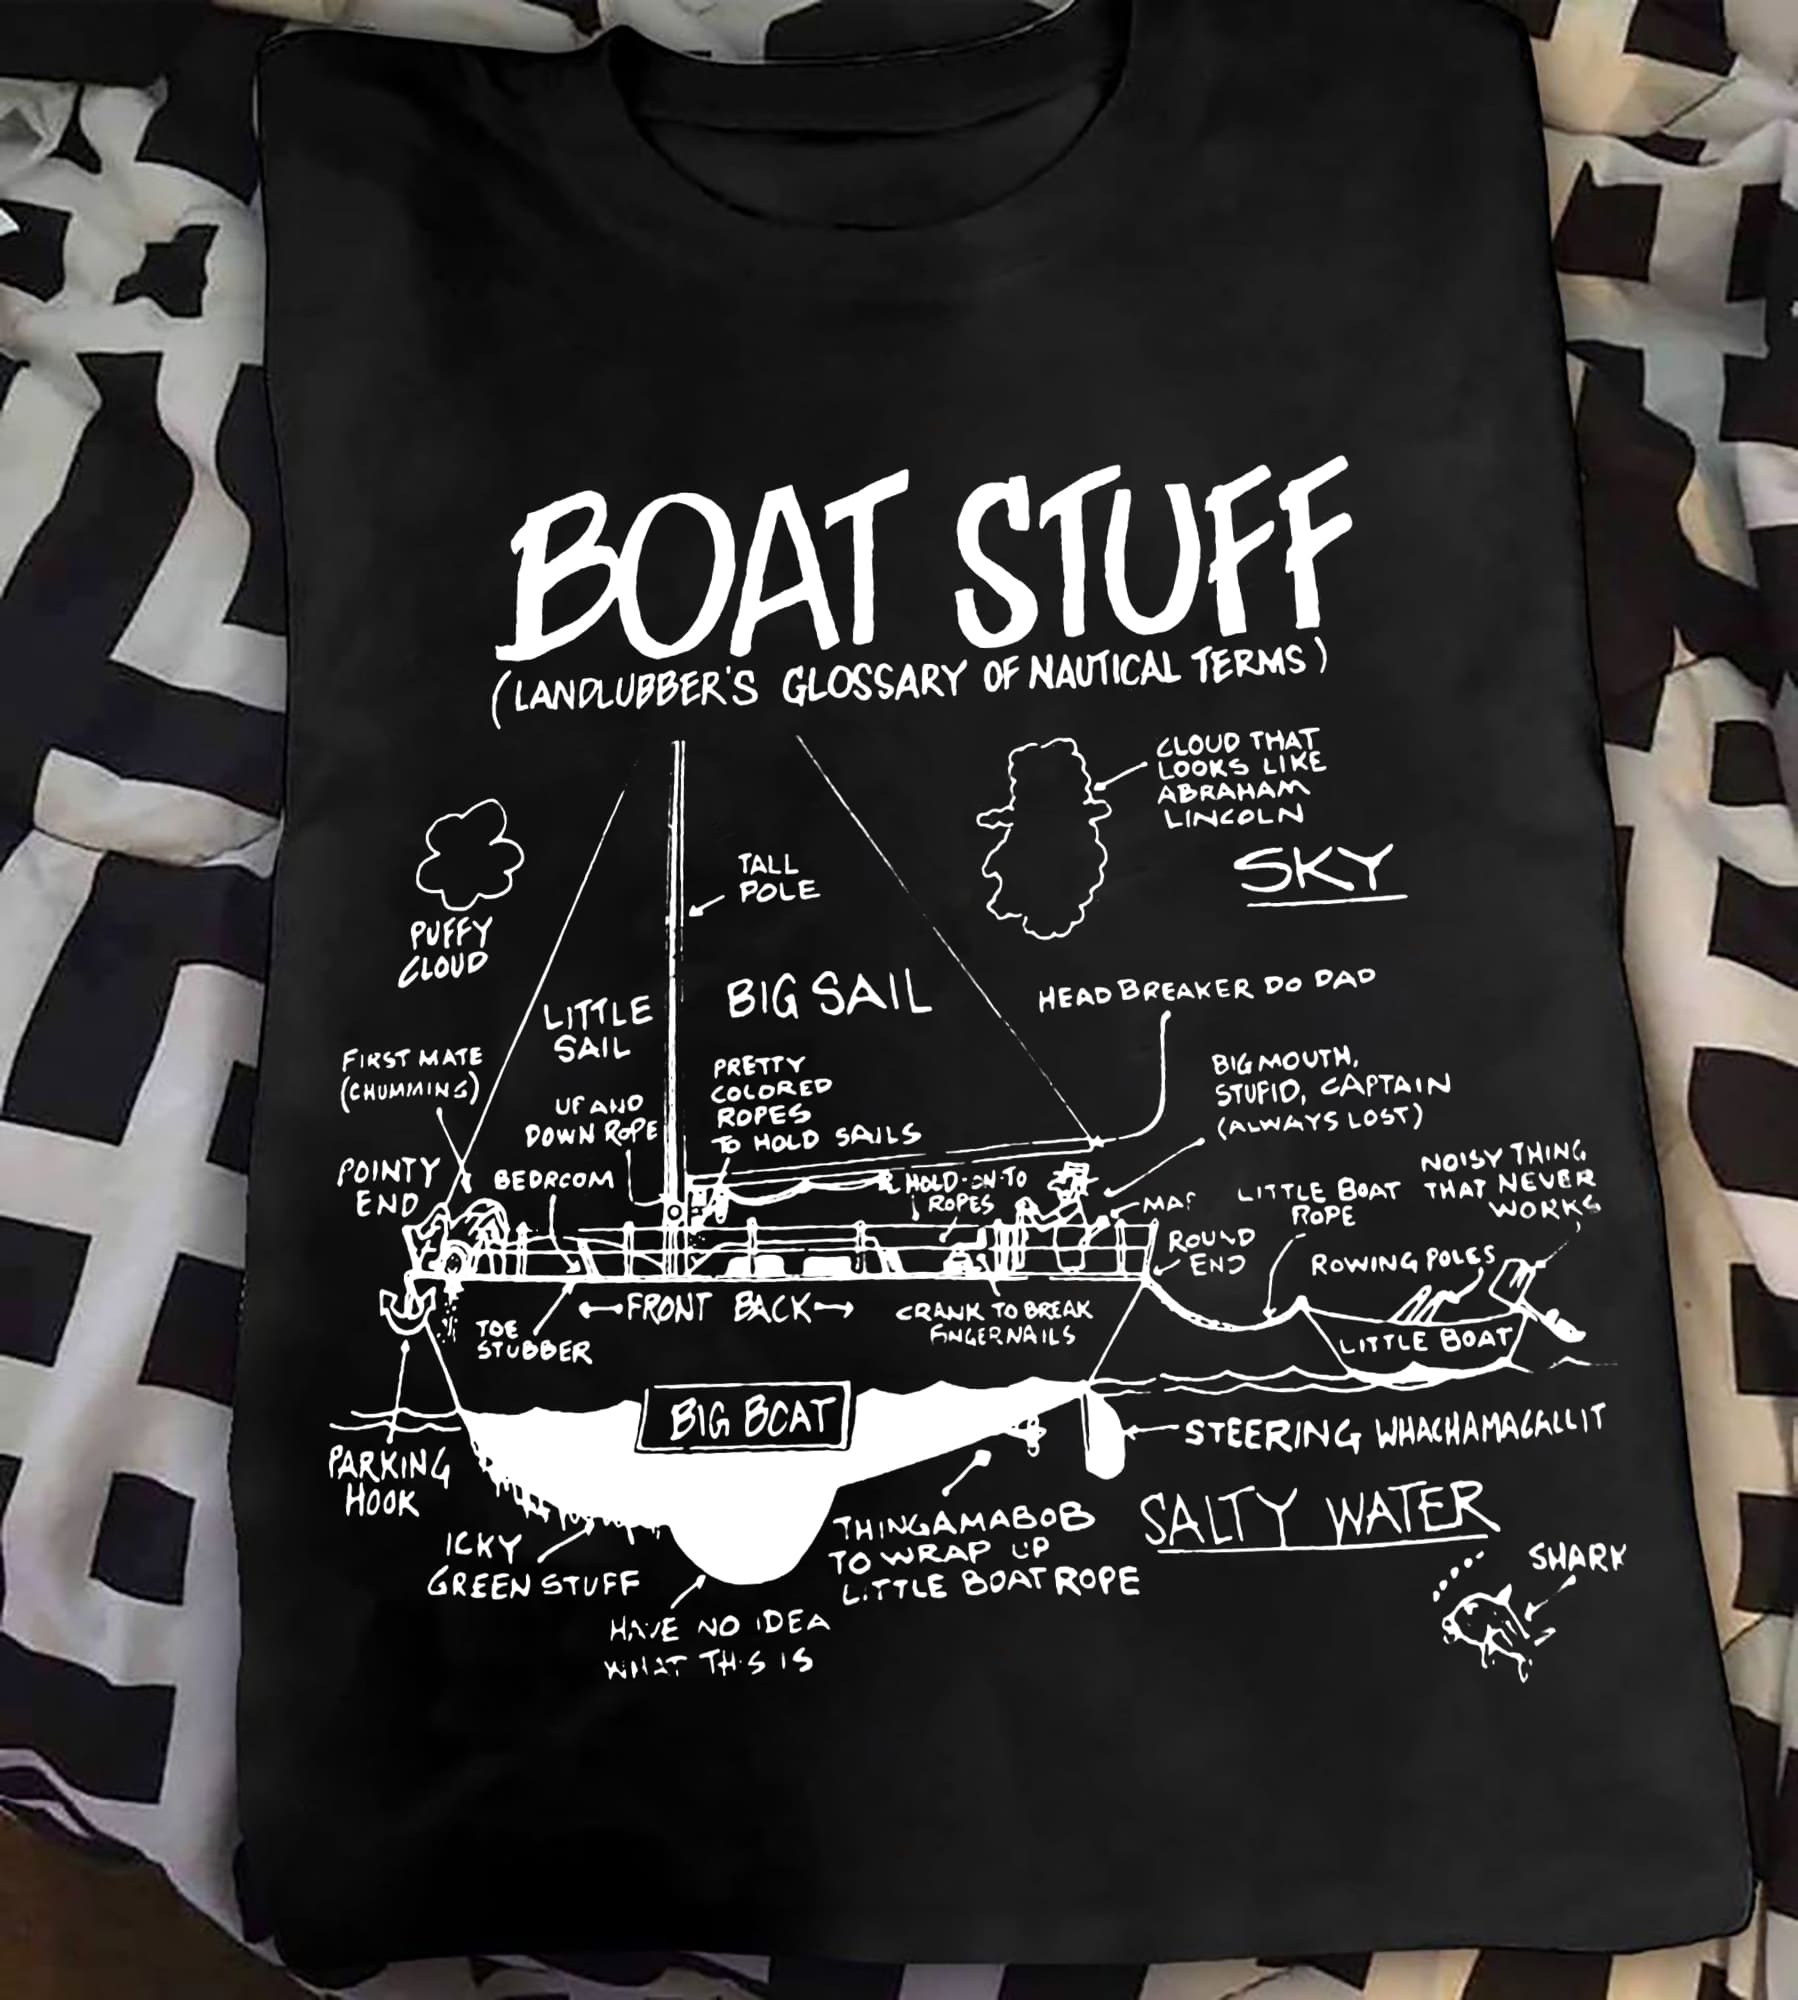 Boat stuff – Landlubber's glossary of nautical terms, puffy cloud, little  sail – FridayStuff